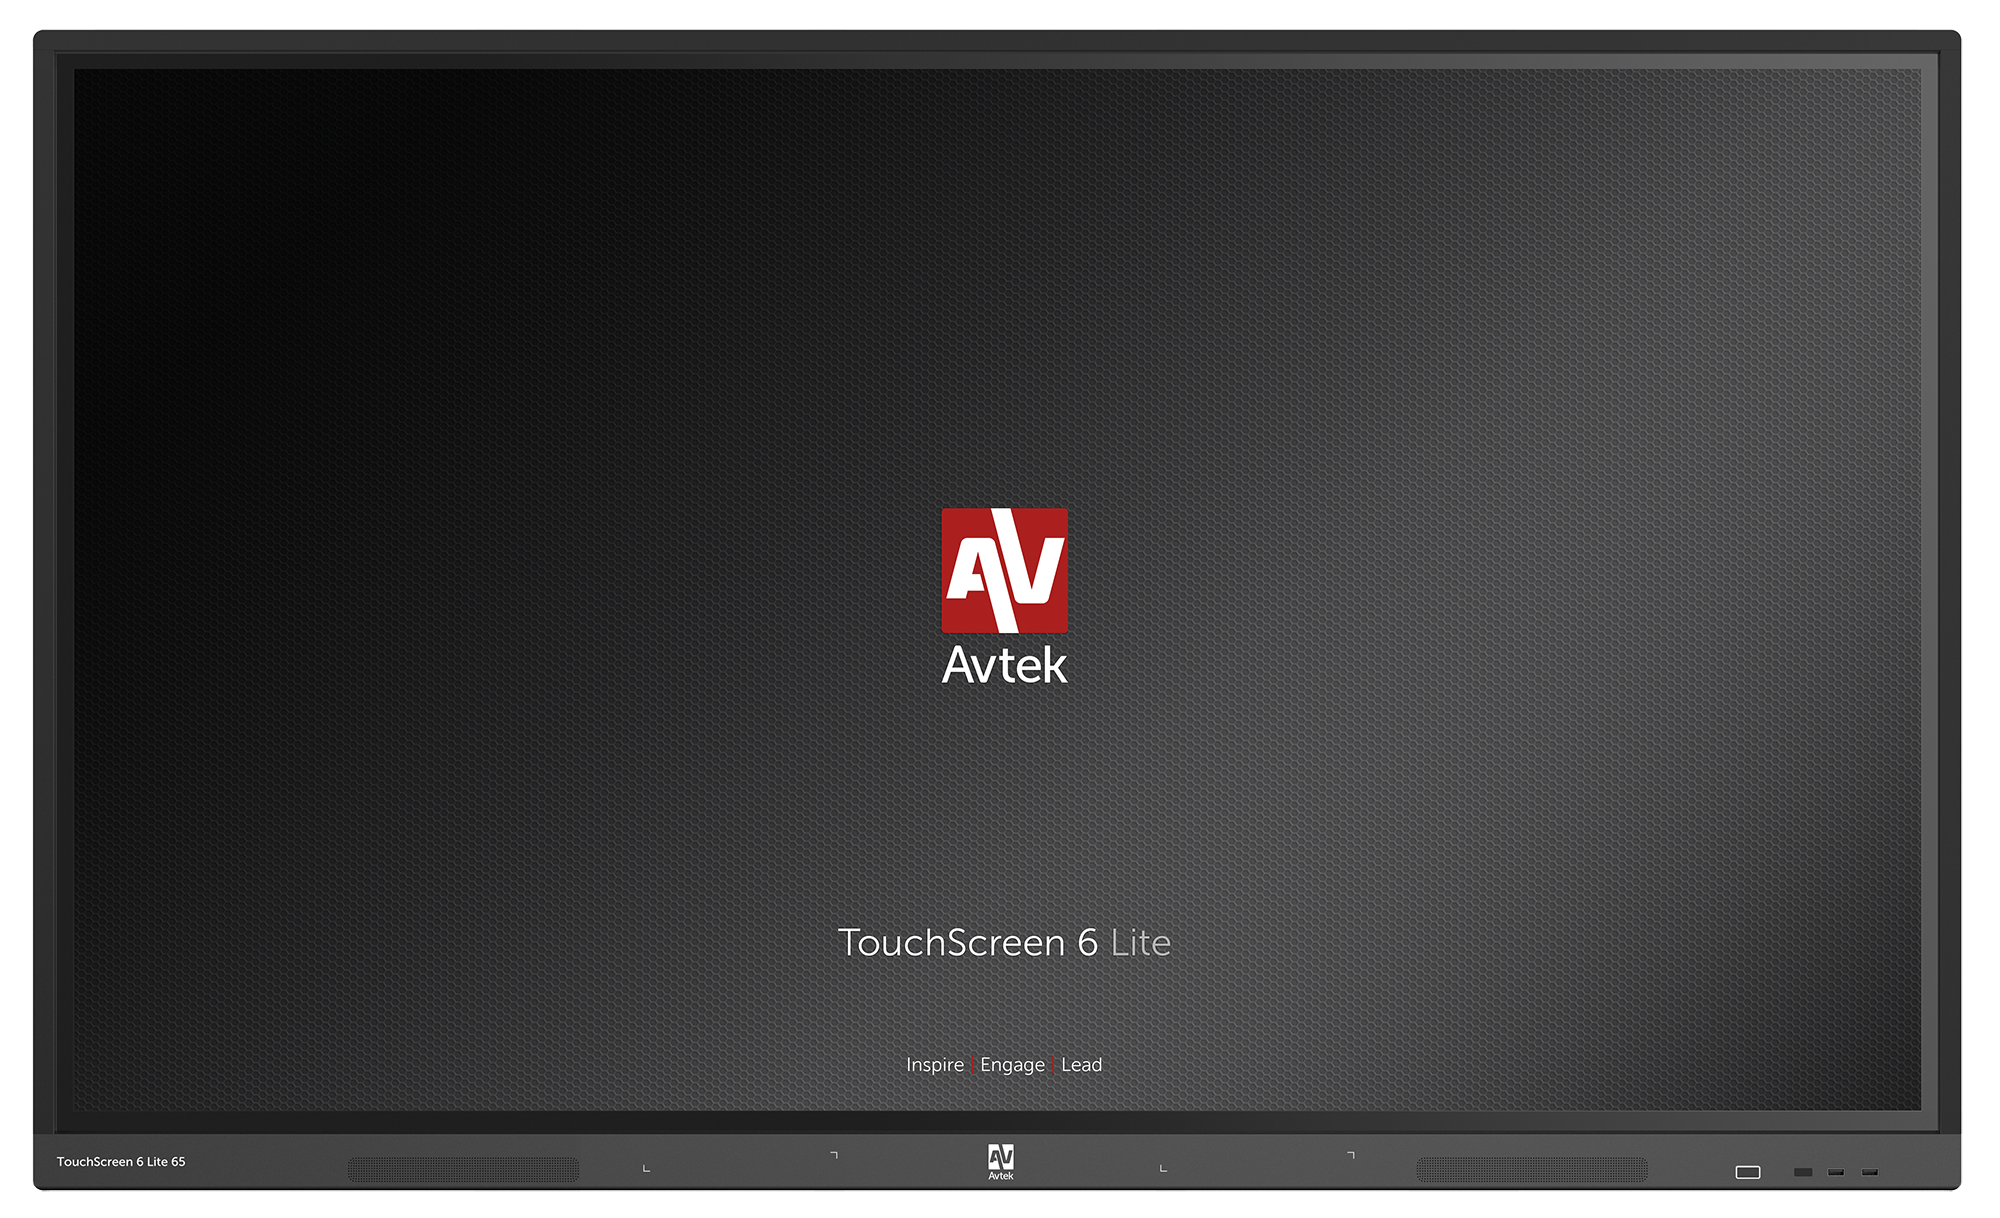 TouchScreen 6 Lite